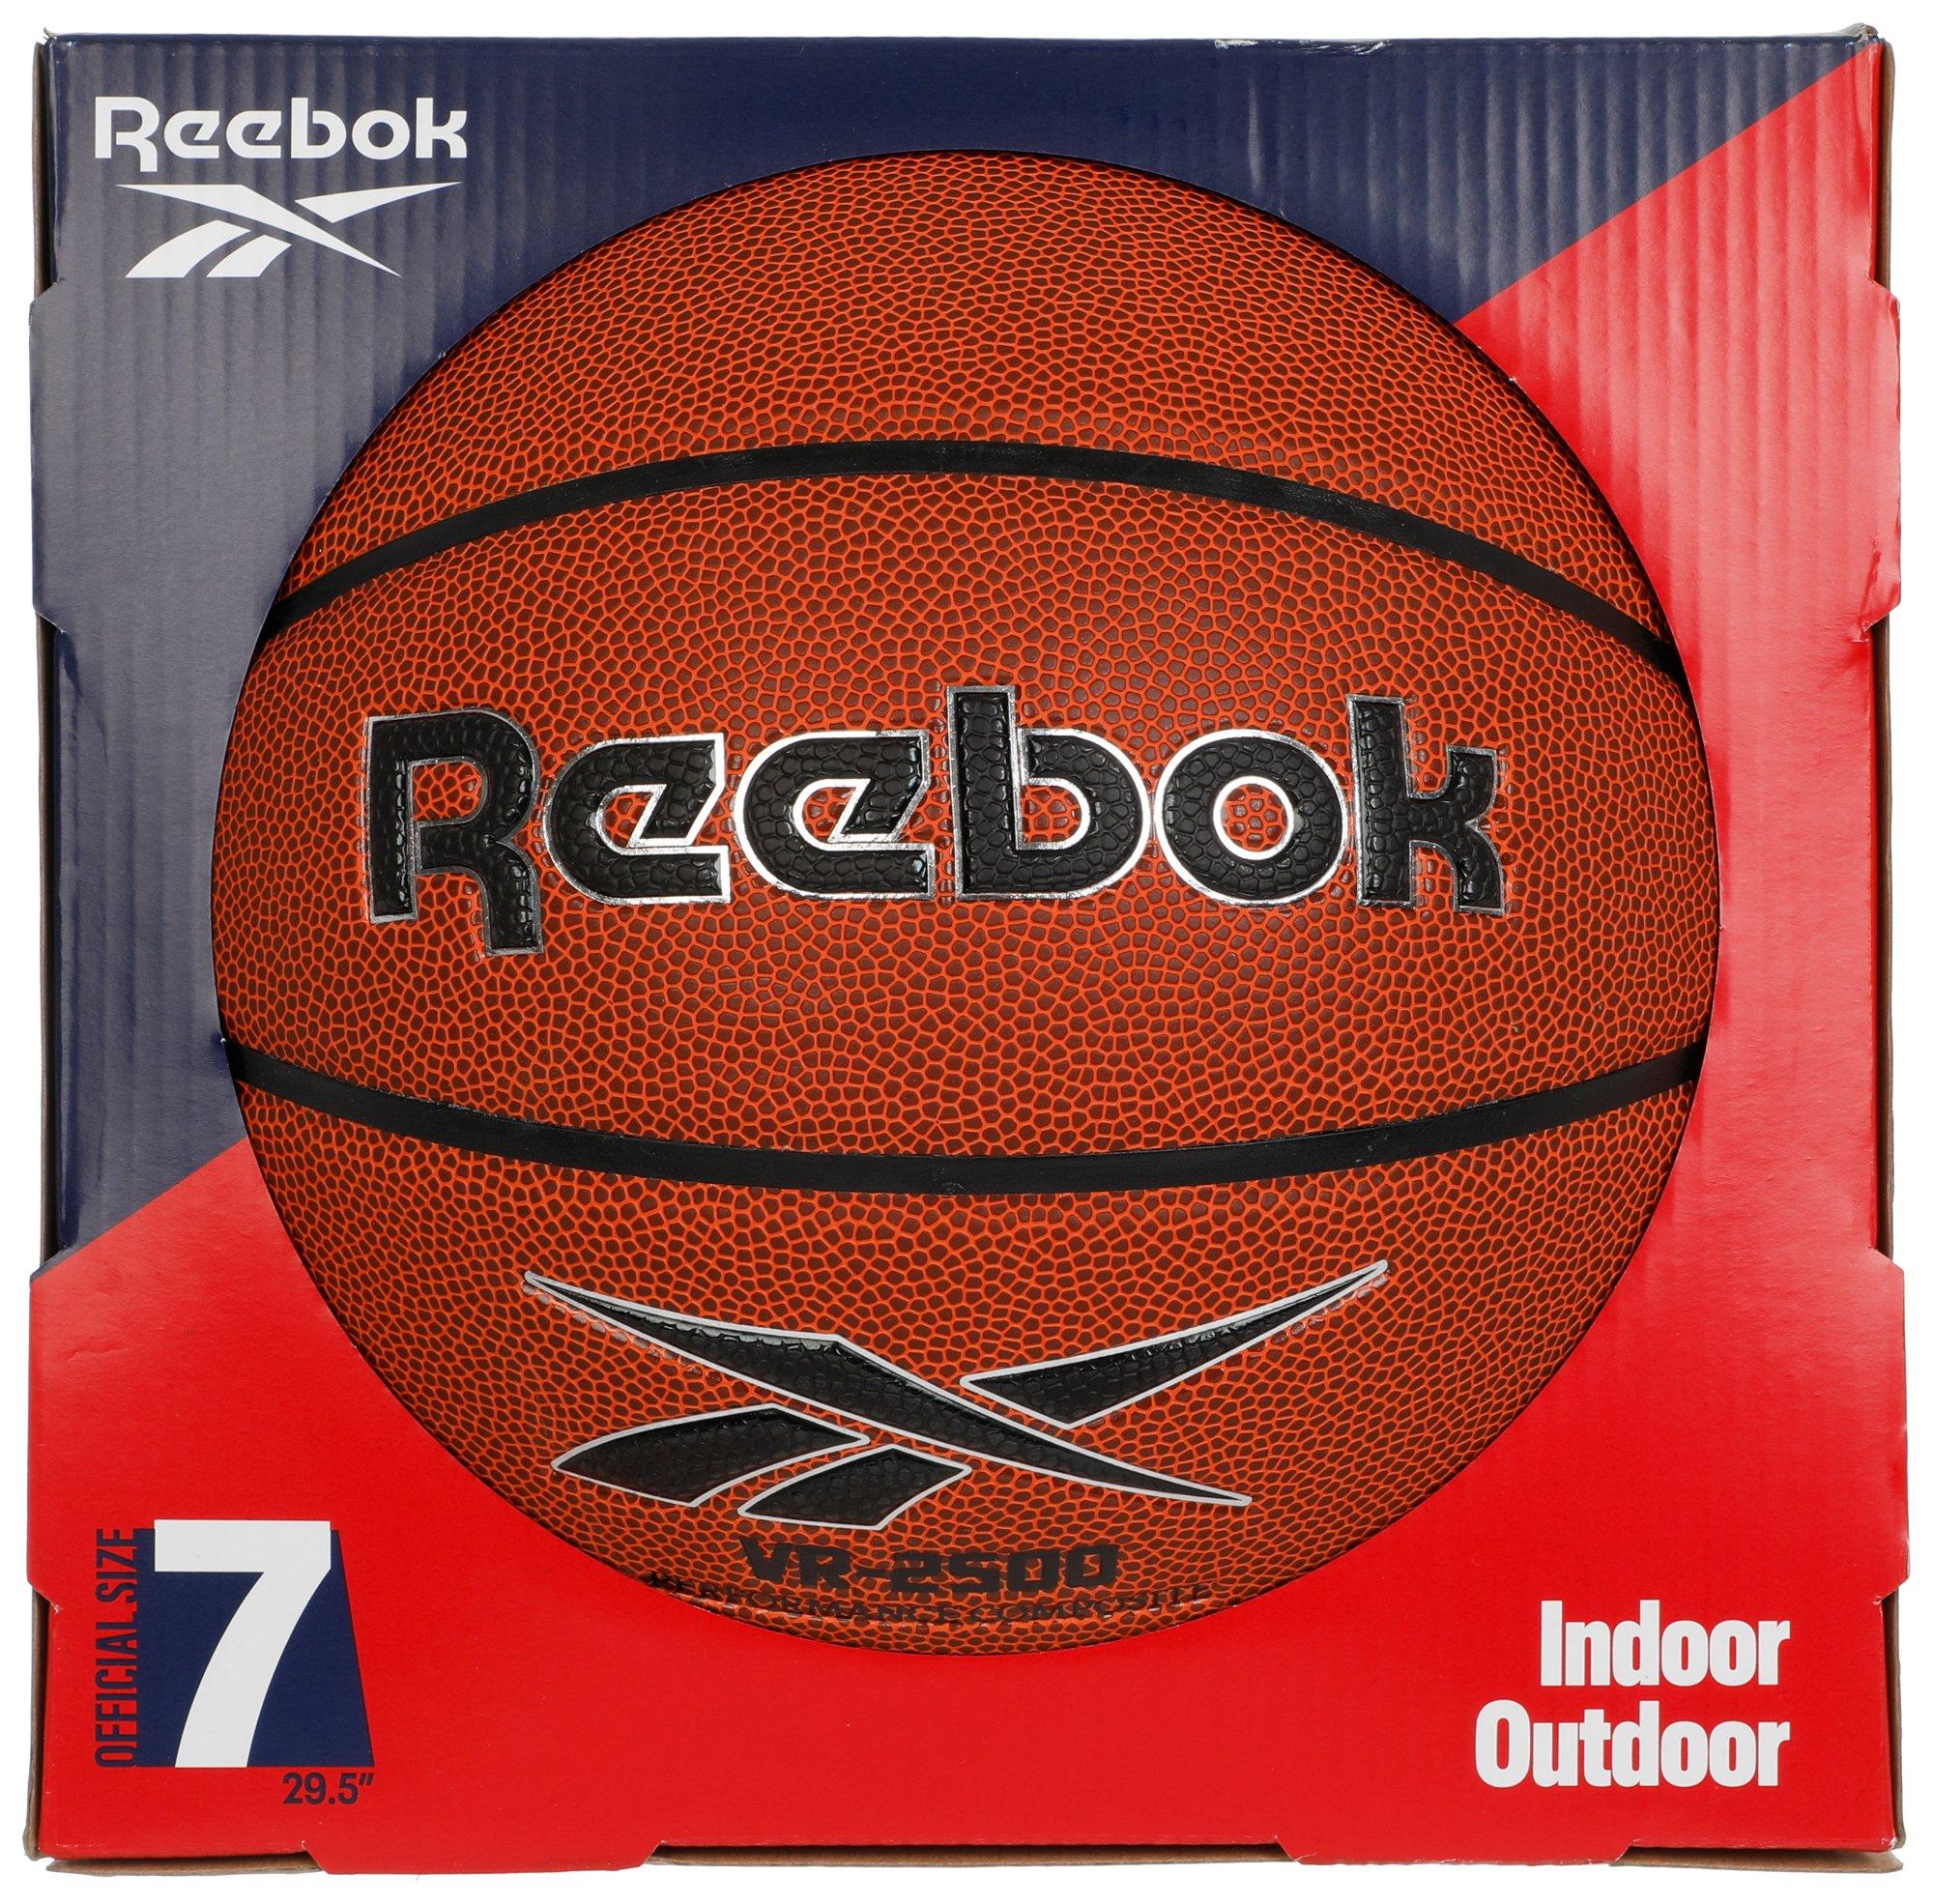 Size 7 Outdoor Basketball